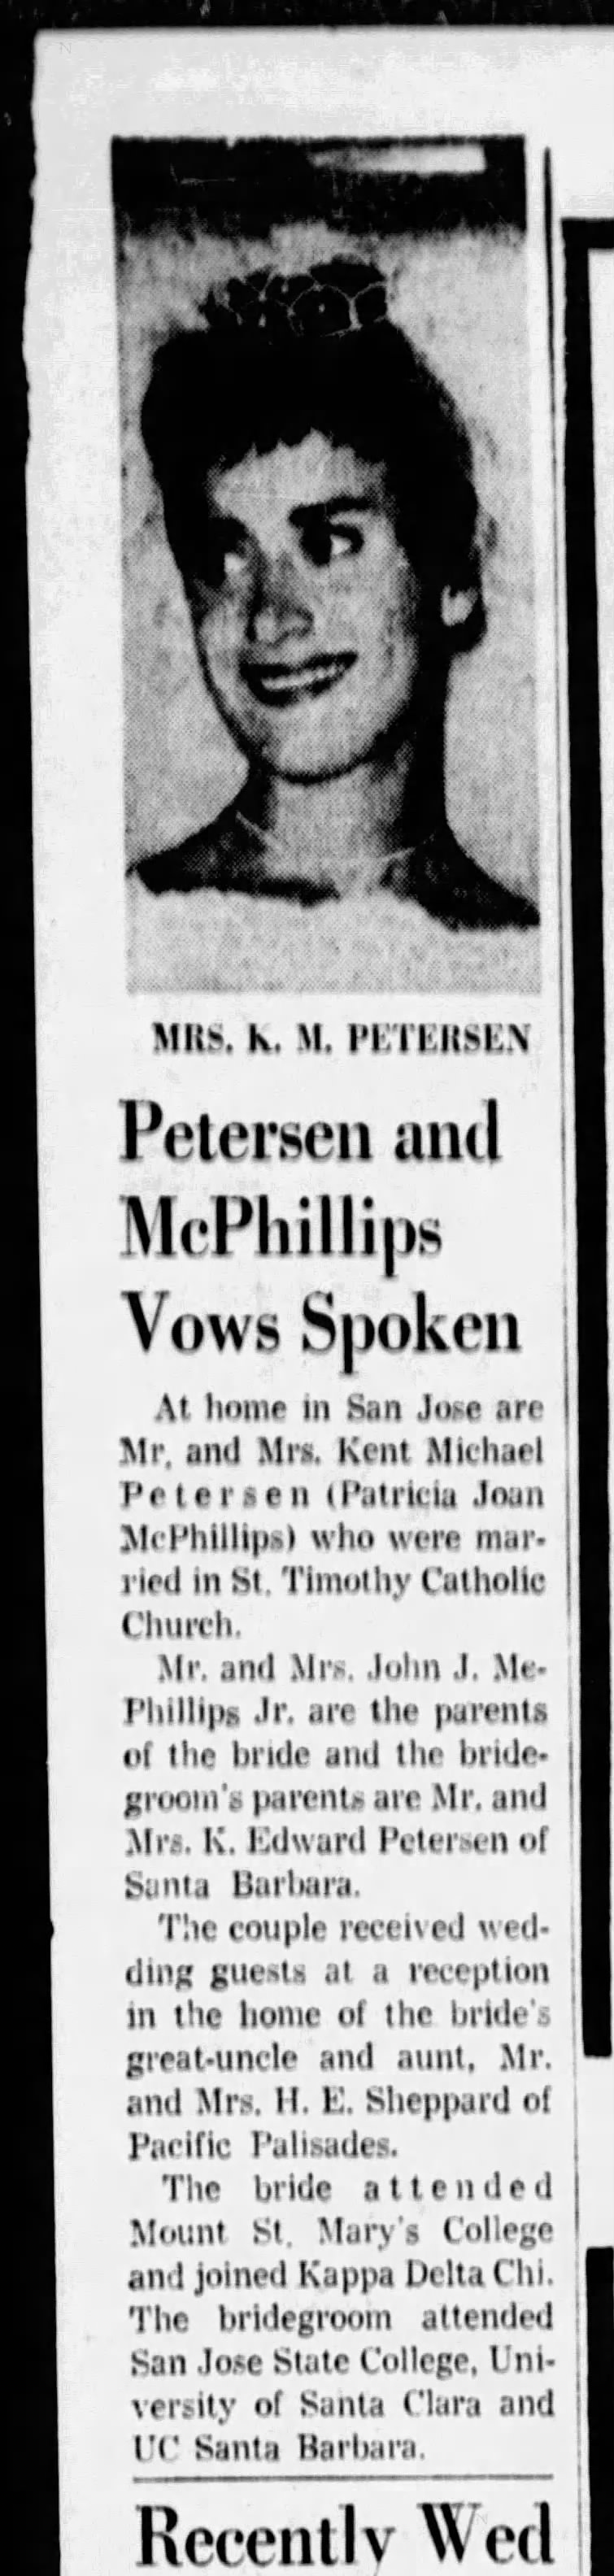 Peterson - McPhillips Vows